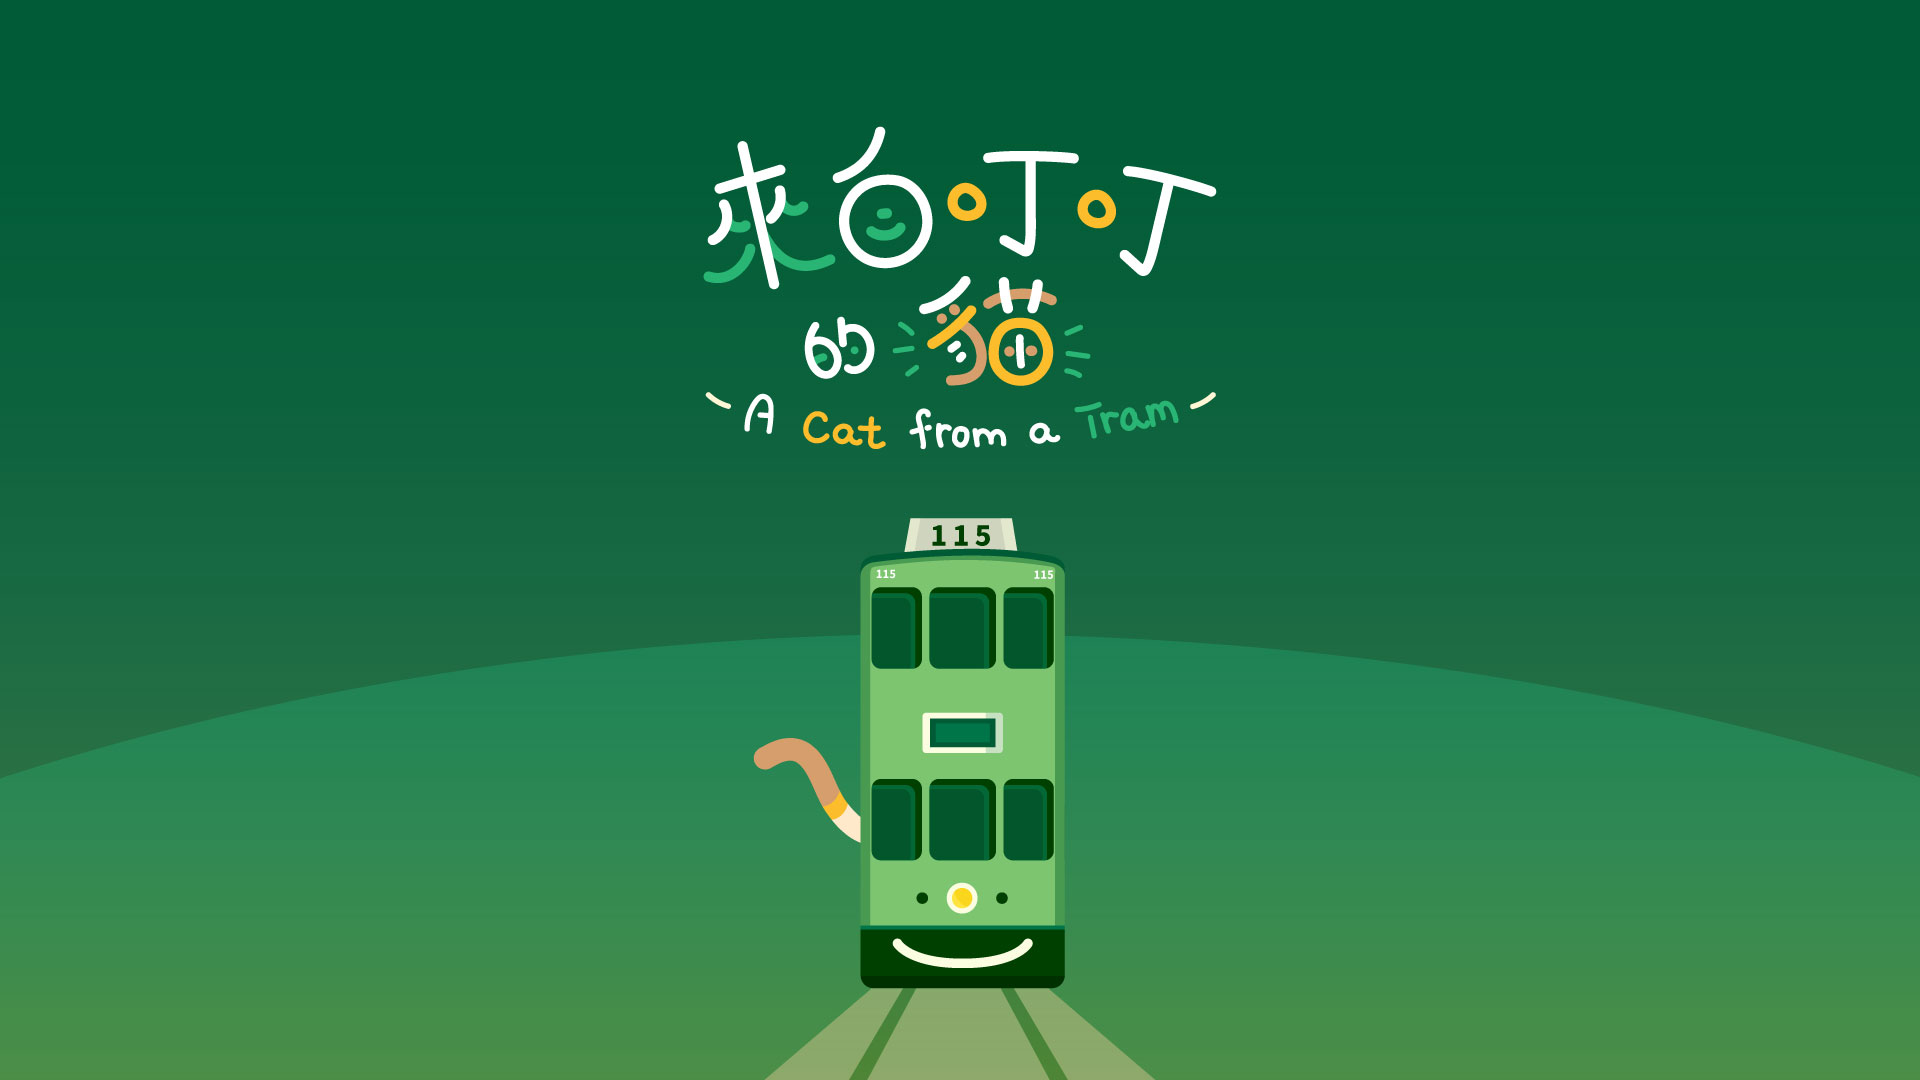 “A Cat from a Tram” Full Episode